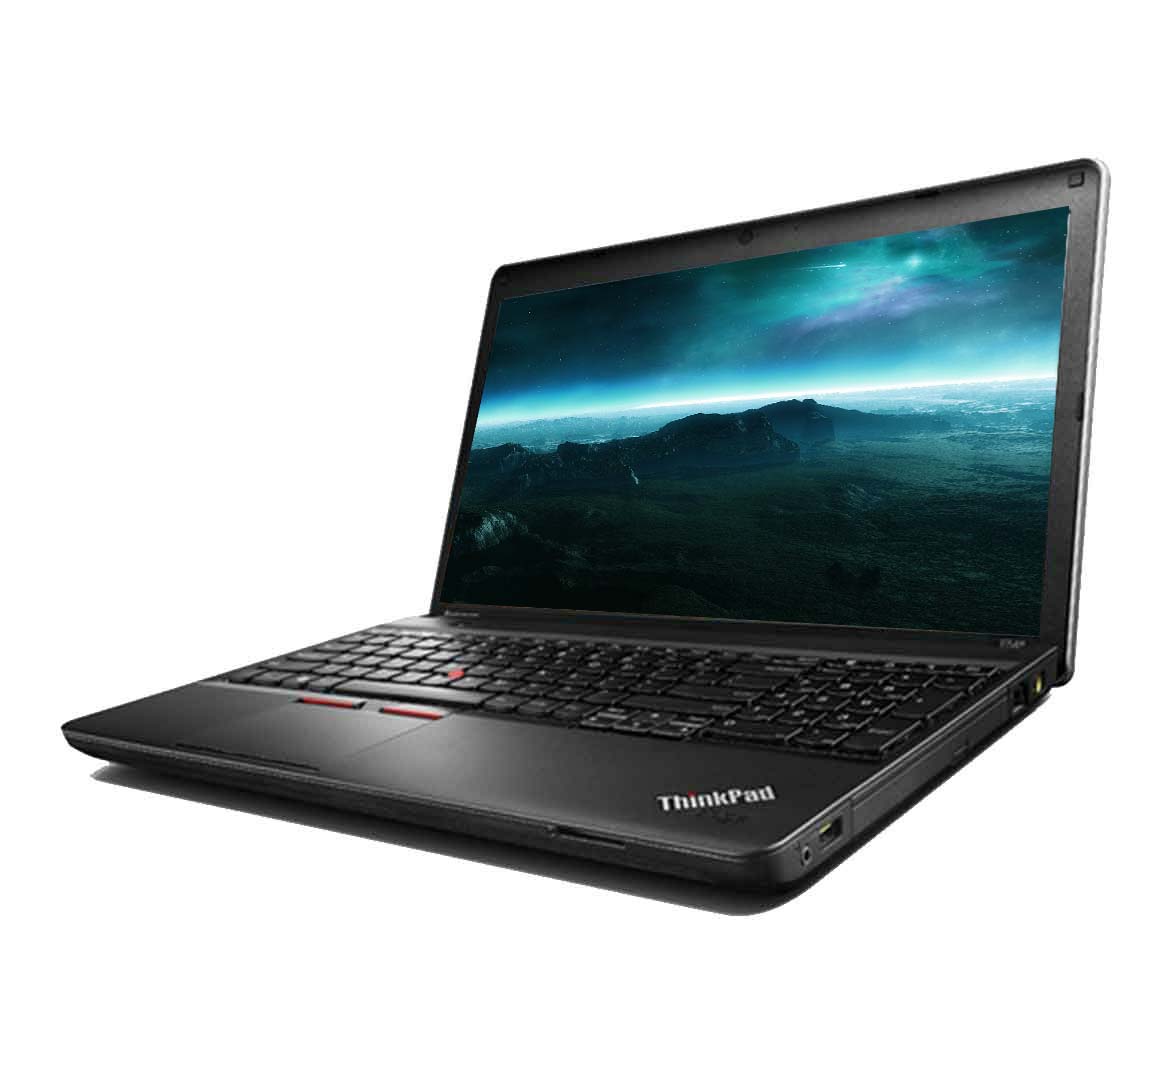 Lenovo ThinkPad Edge E545 Laptop, AMD A6 Series CPU, 4GB RAM, 320GB HDD, AMD Radeon HD, 15 inch Display, Windows 10 Pro